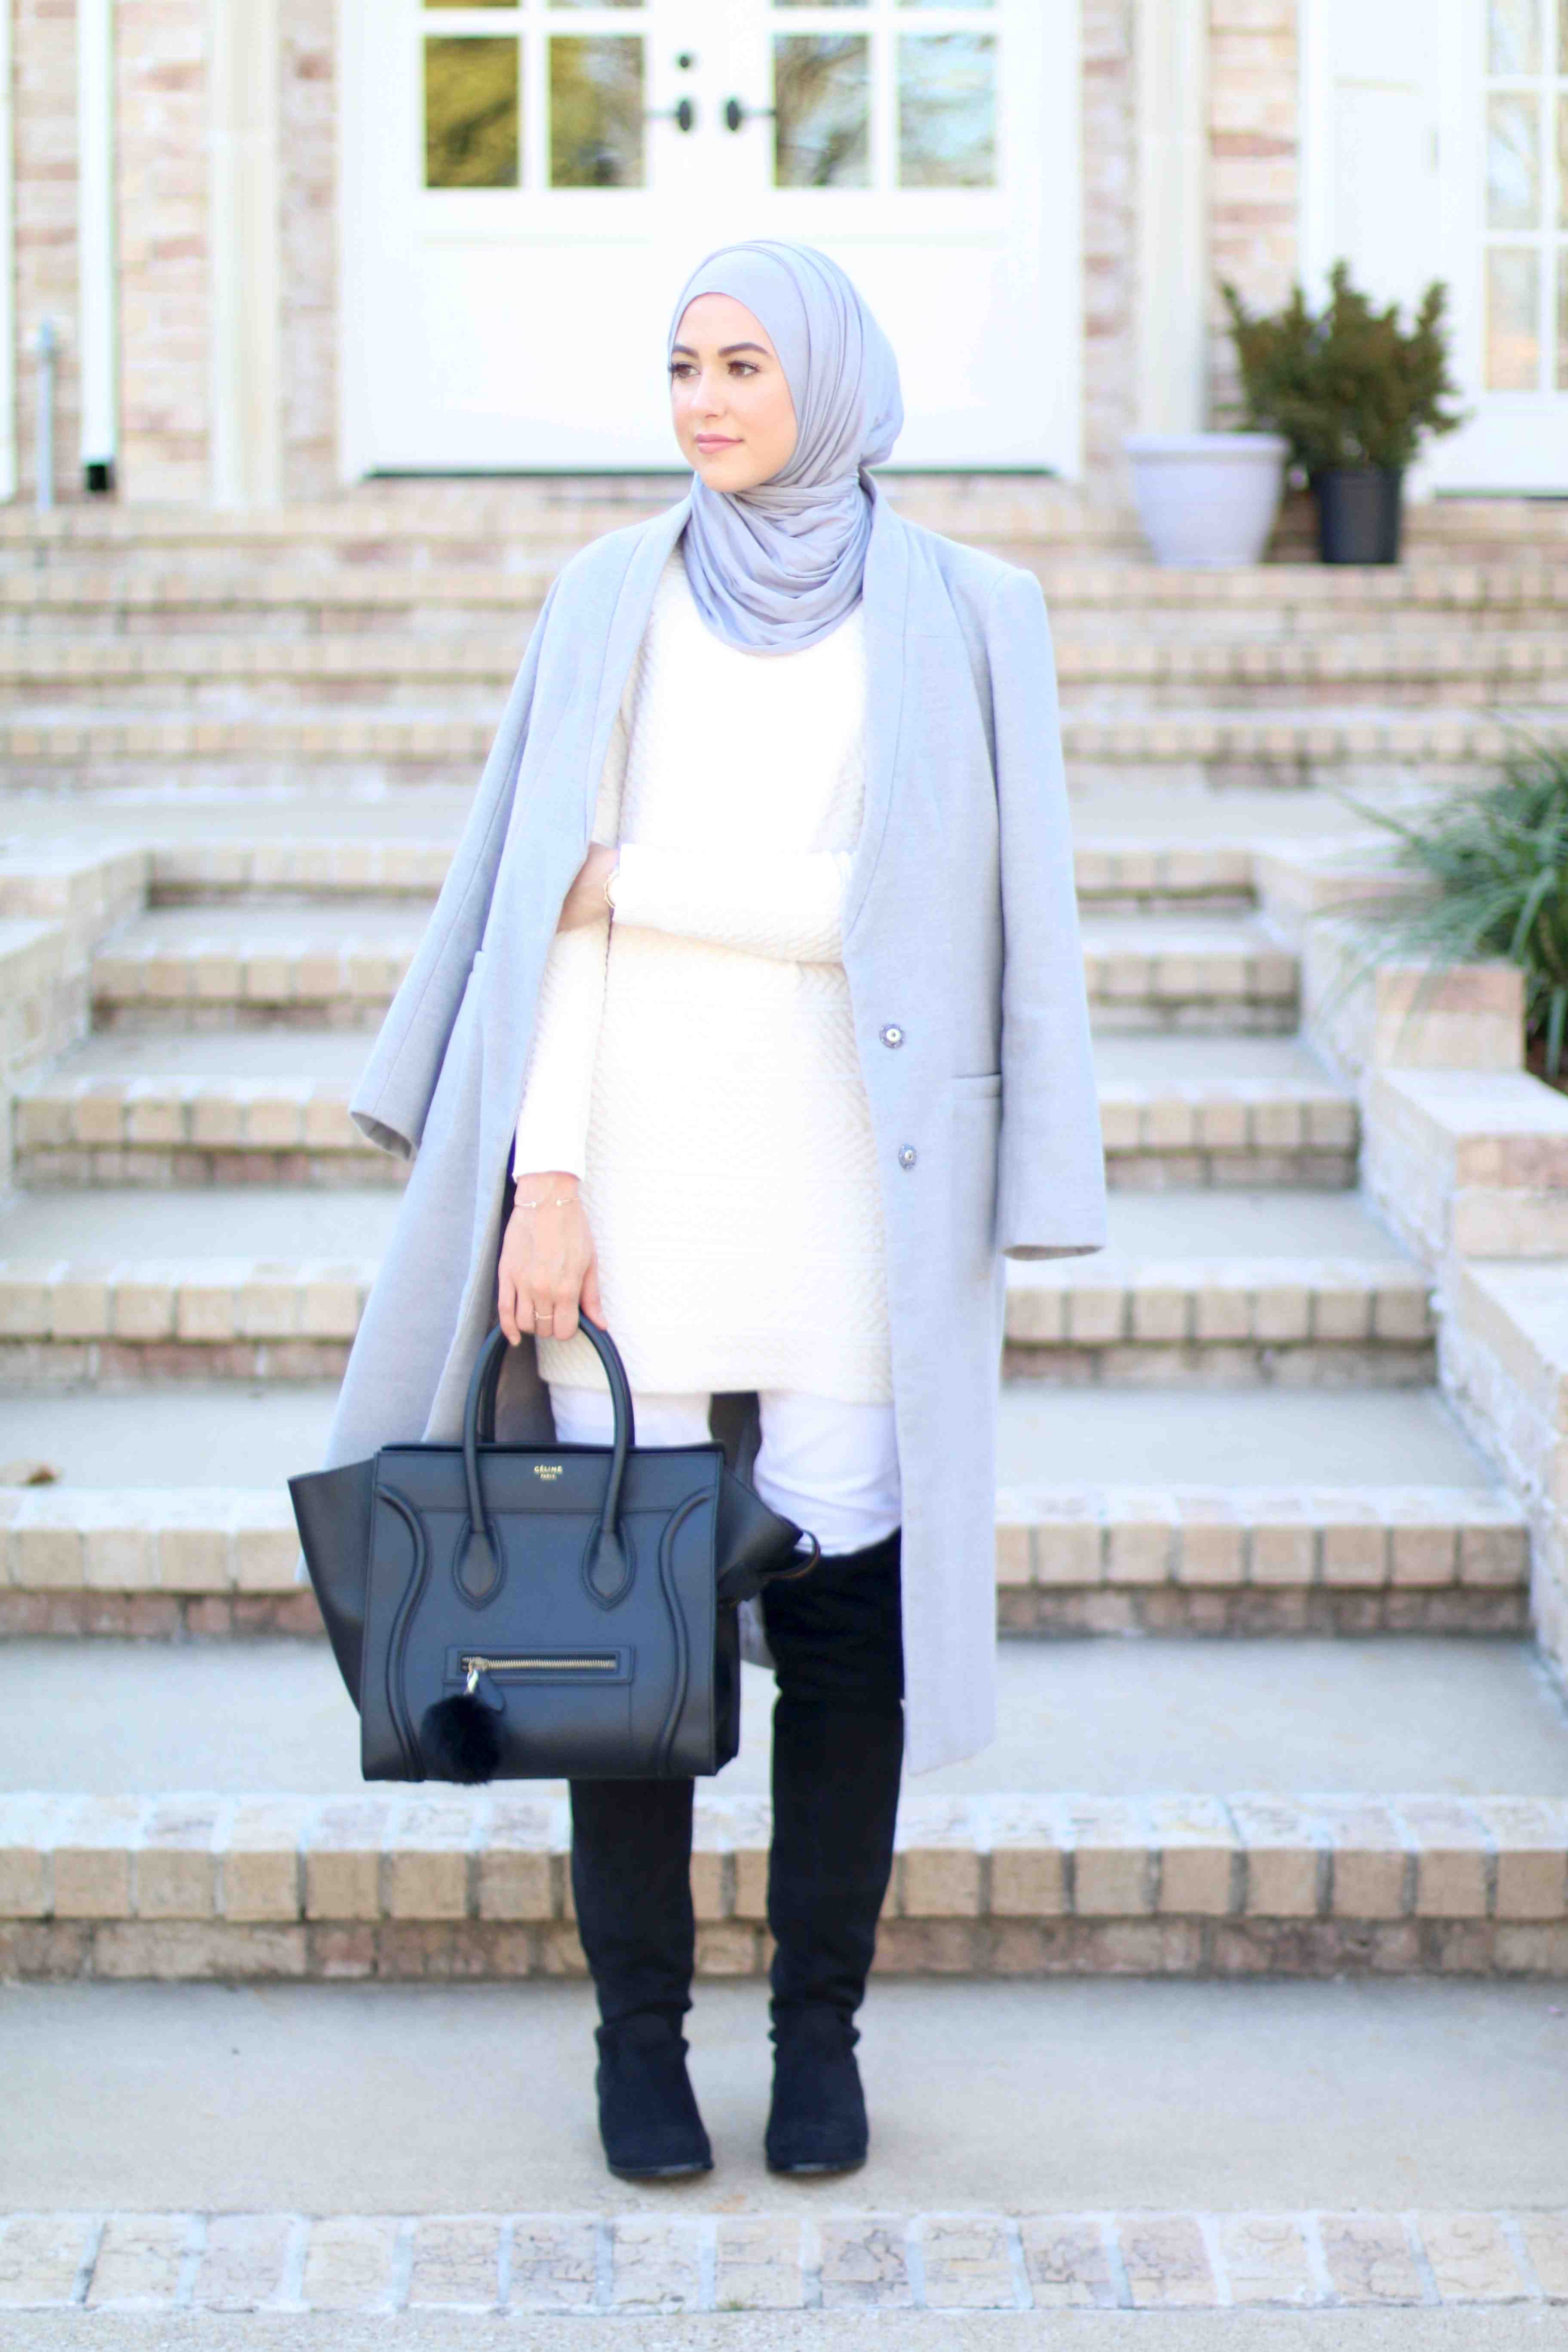 With Love, Leena. – A Fashion + Lifestyle Blog by Leena Asad